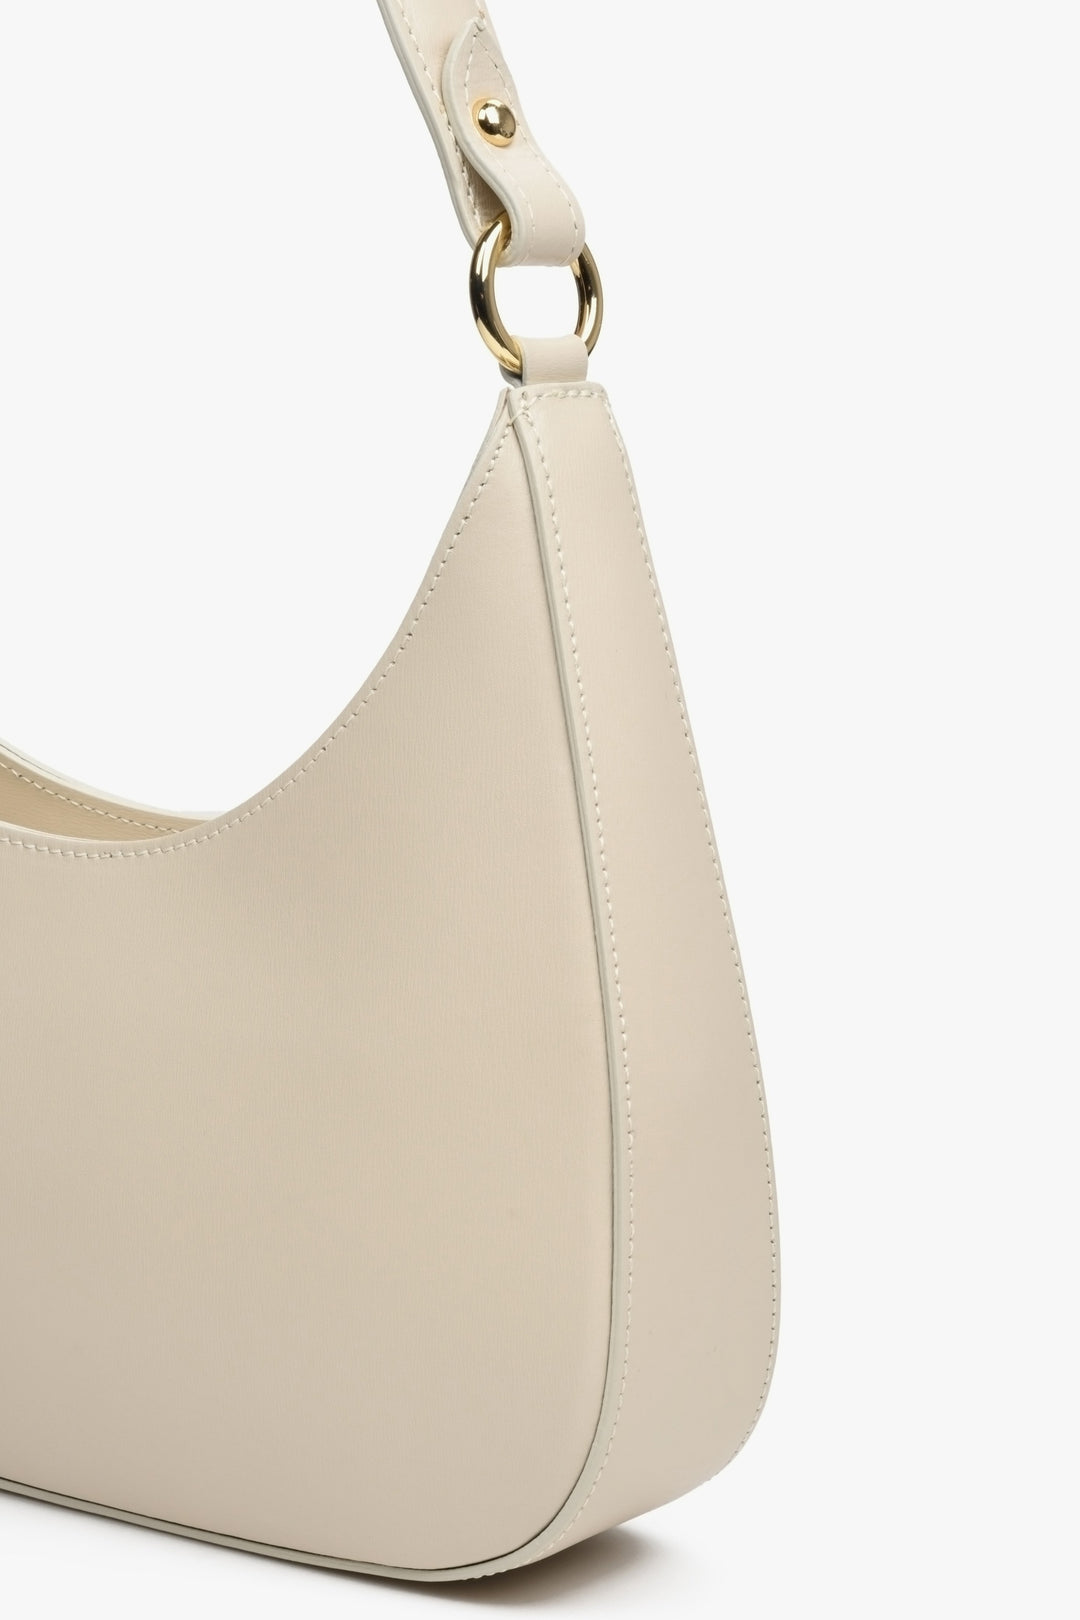 Women's Italian natural leather shoulder bag in sand beige.